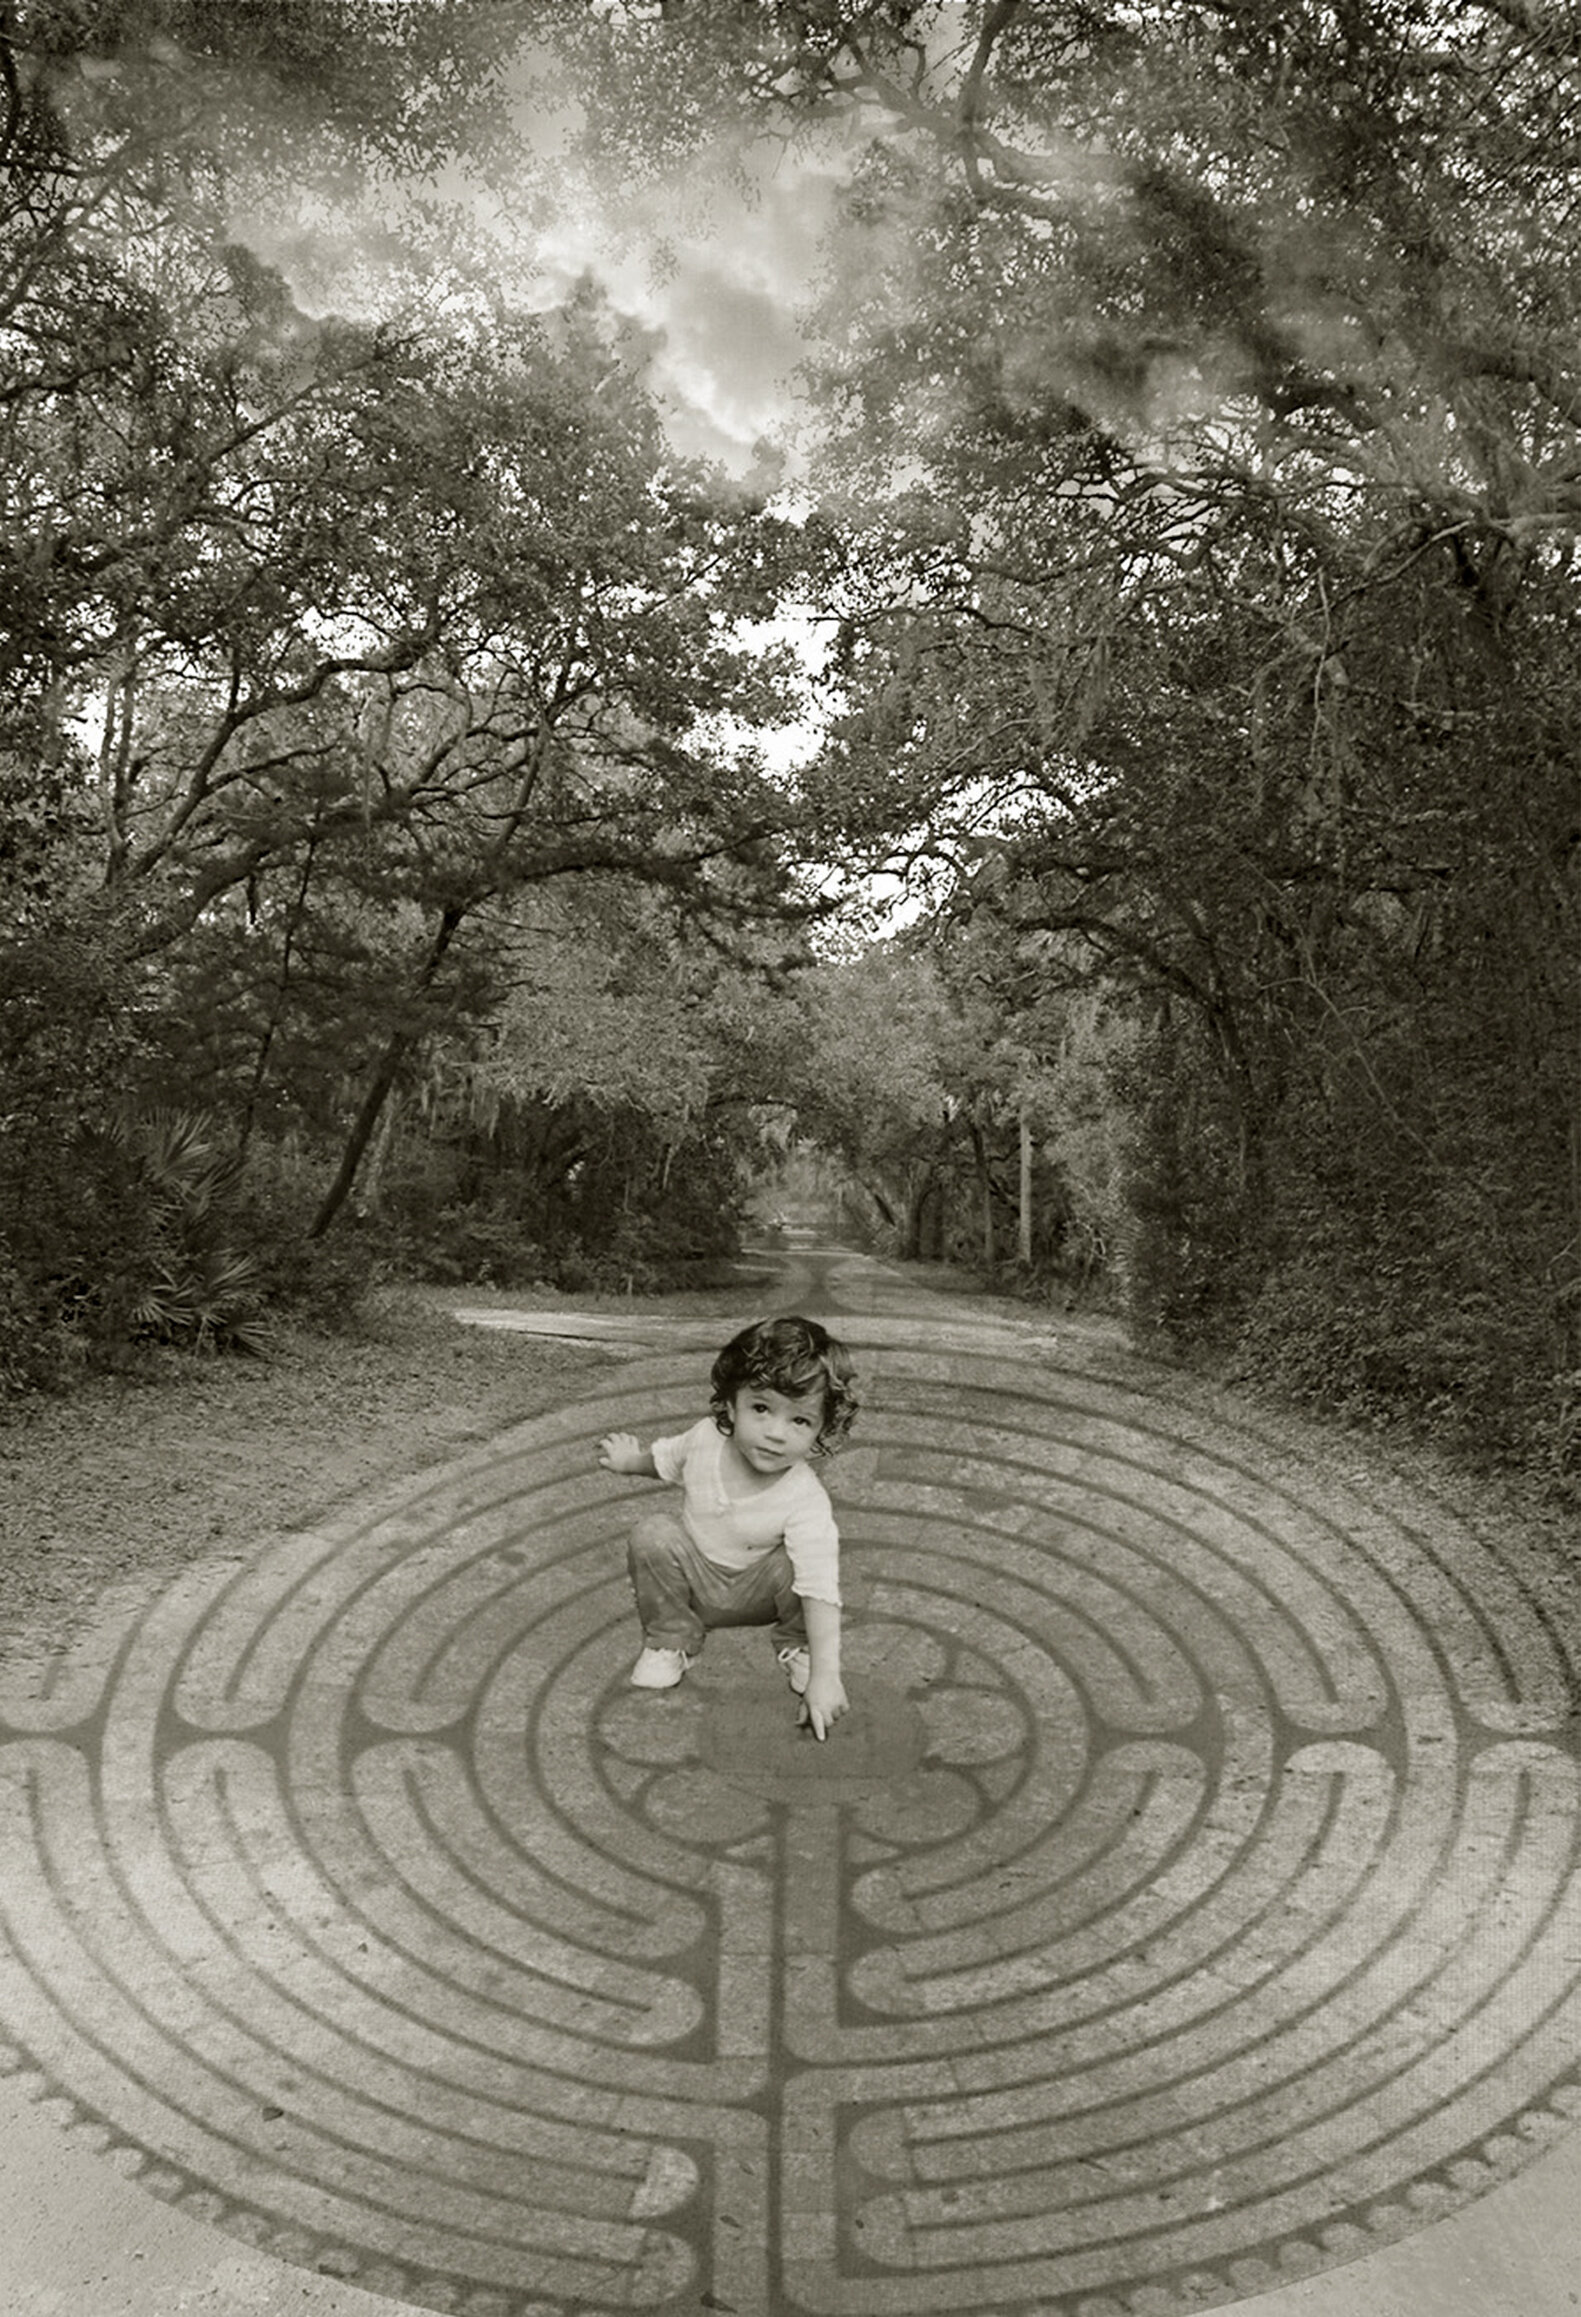  Labyrinth Child, 2003 